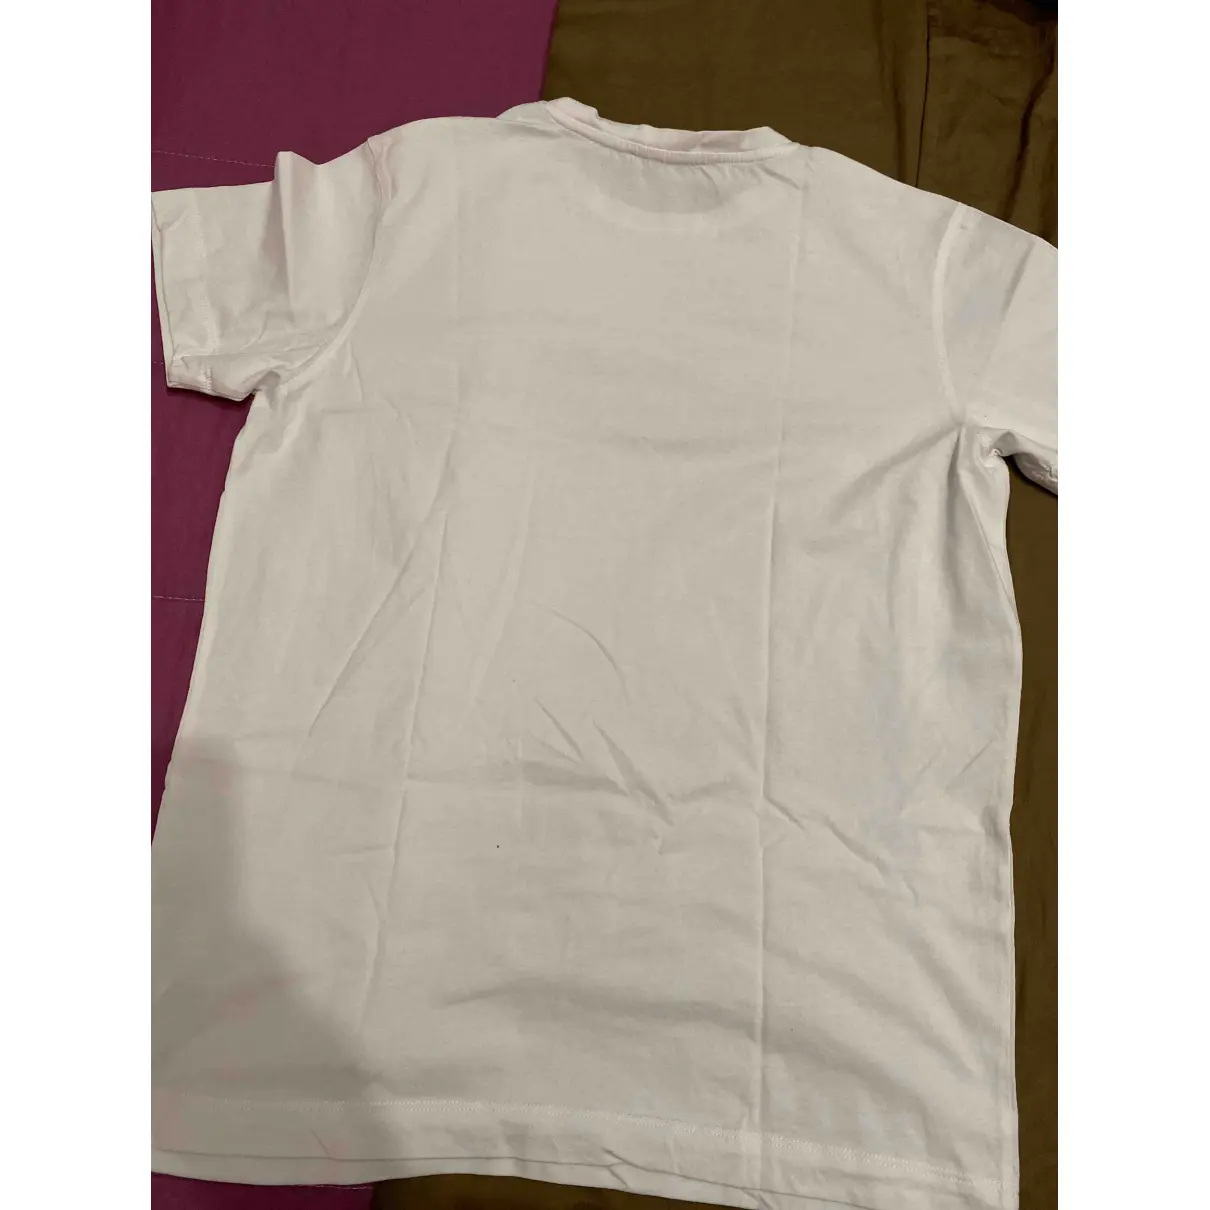 Buy Roberto Cavalli White Cotton T-shirt online